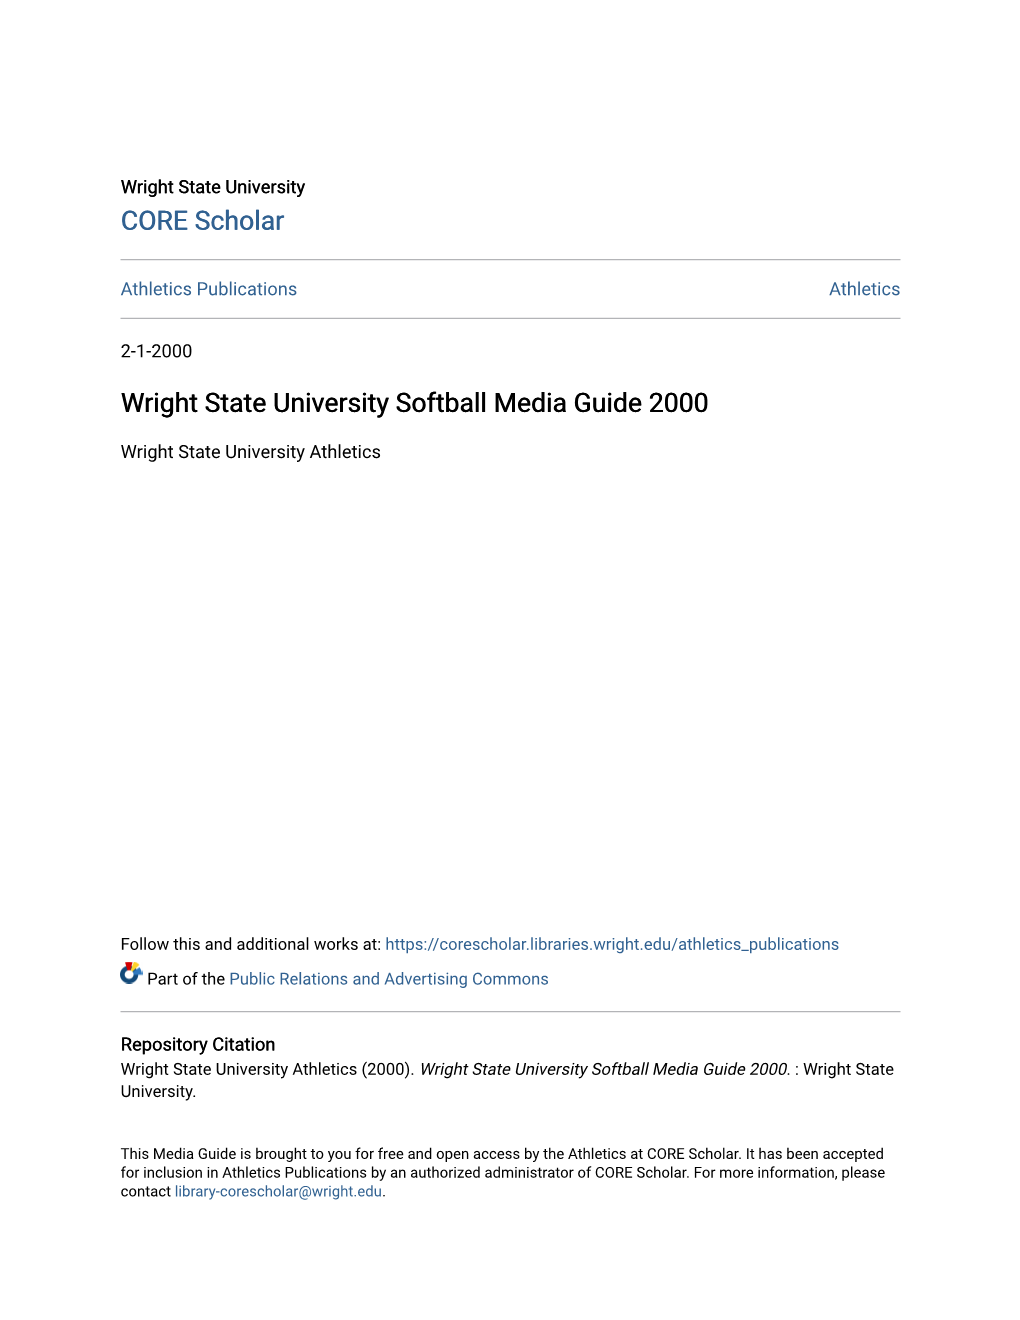 Wright State University Softball Media Guide 2000